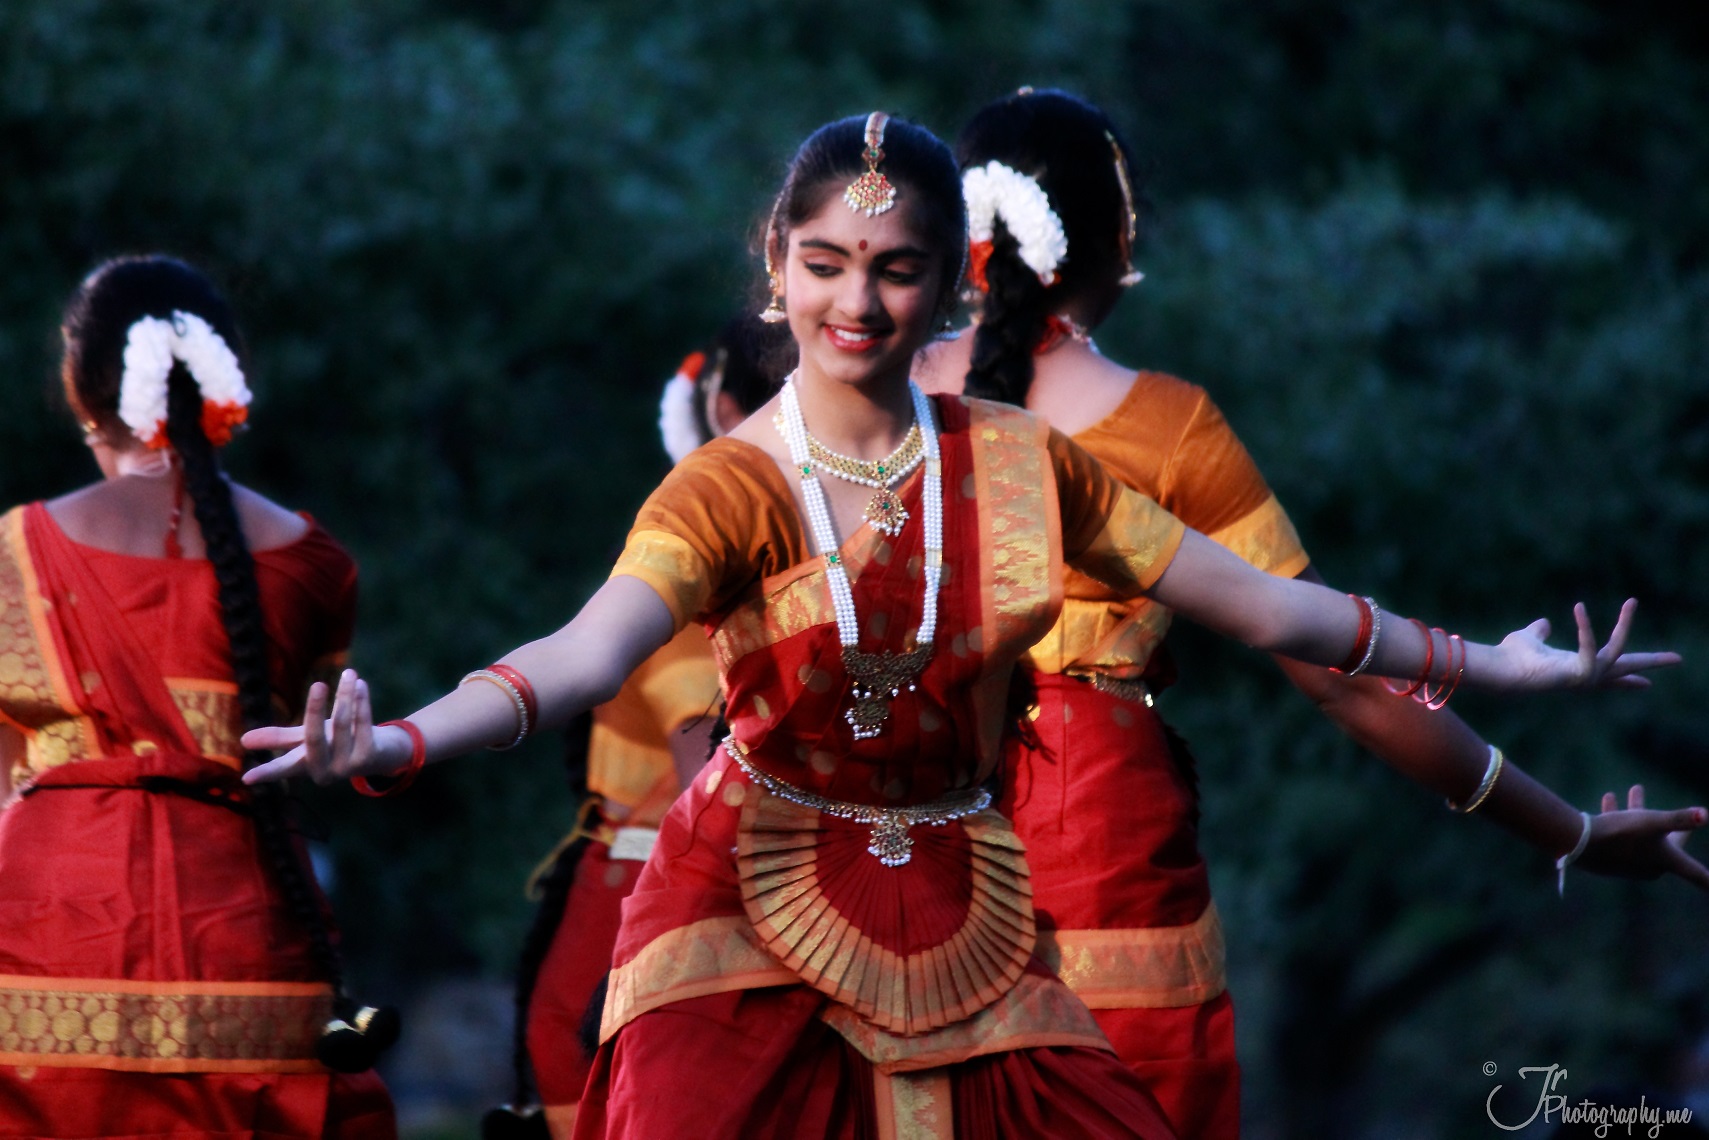 Dipavali Hindu festival and dance